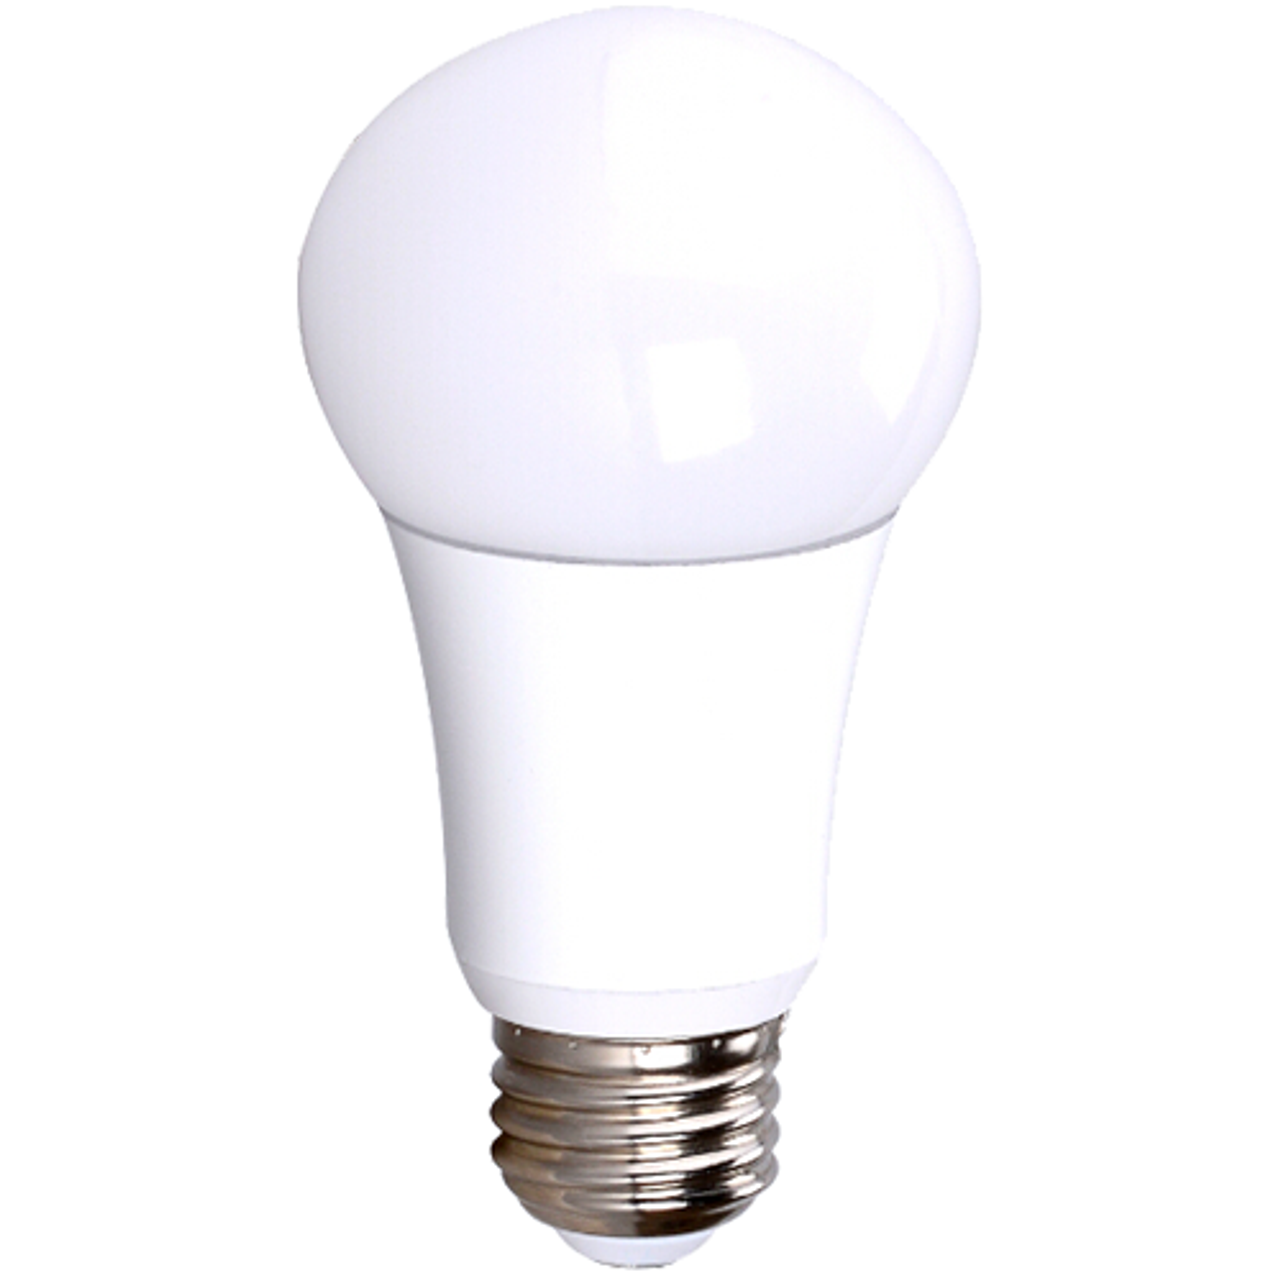 A19 LED Light Bulb, 9 Watt, 800 Lumens, 6500K